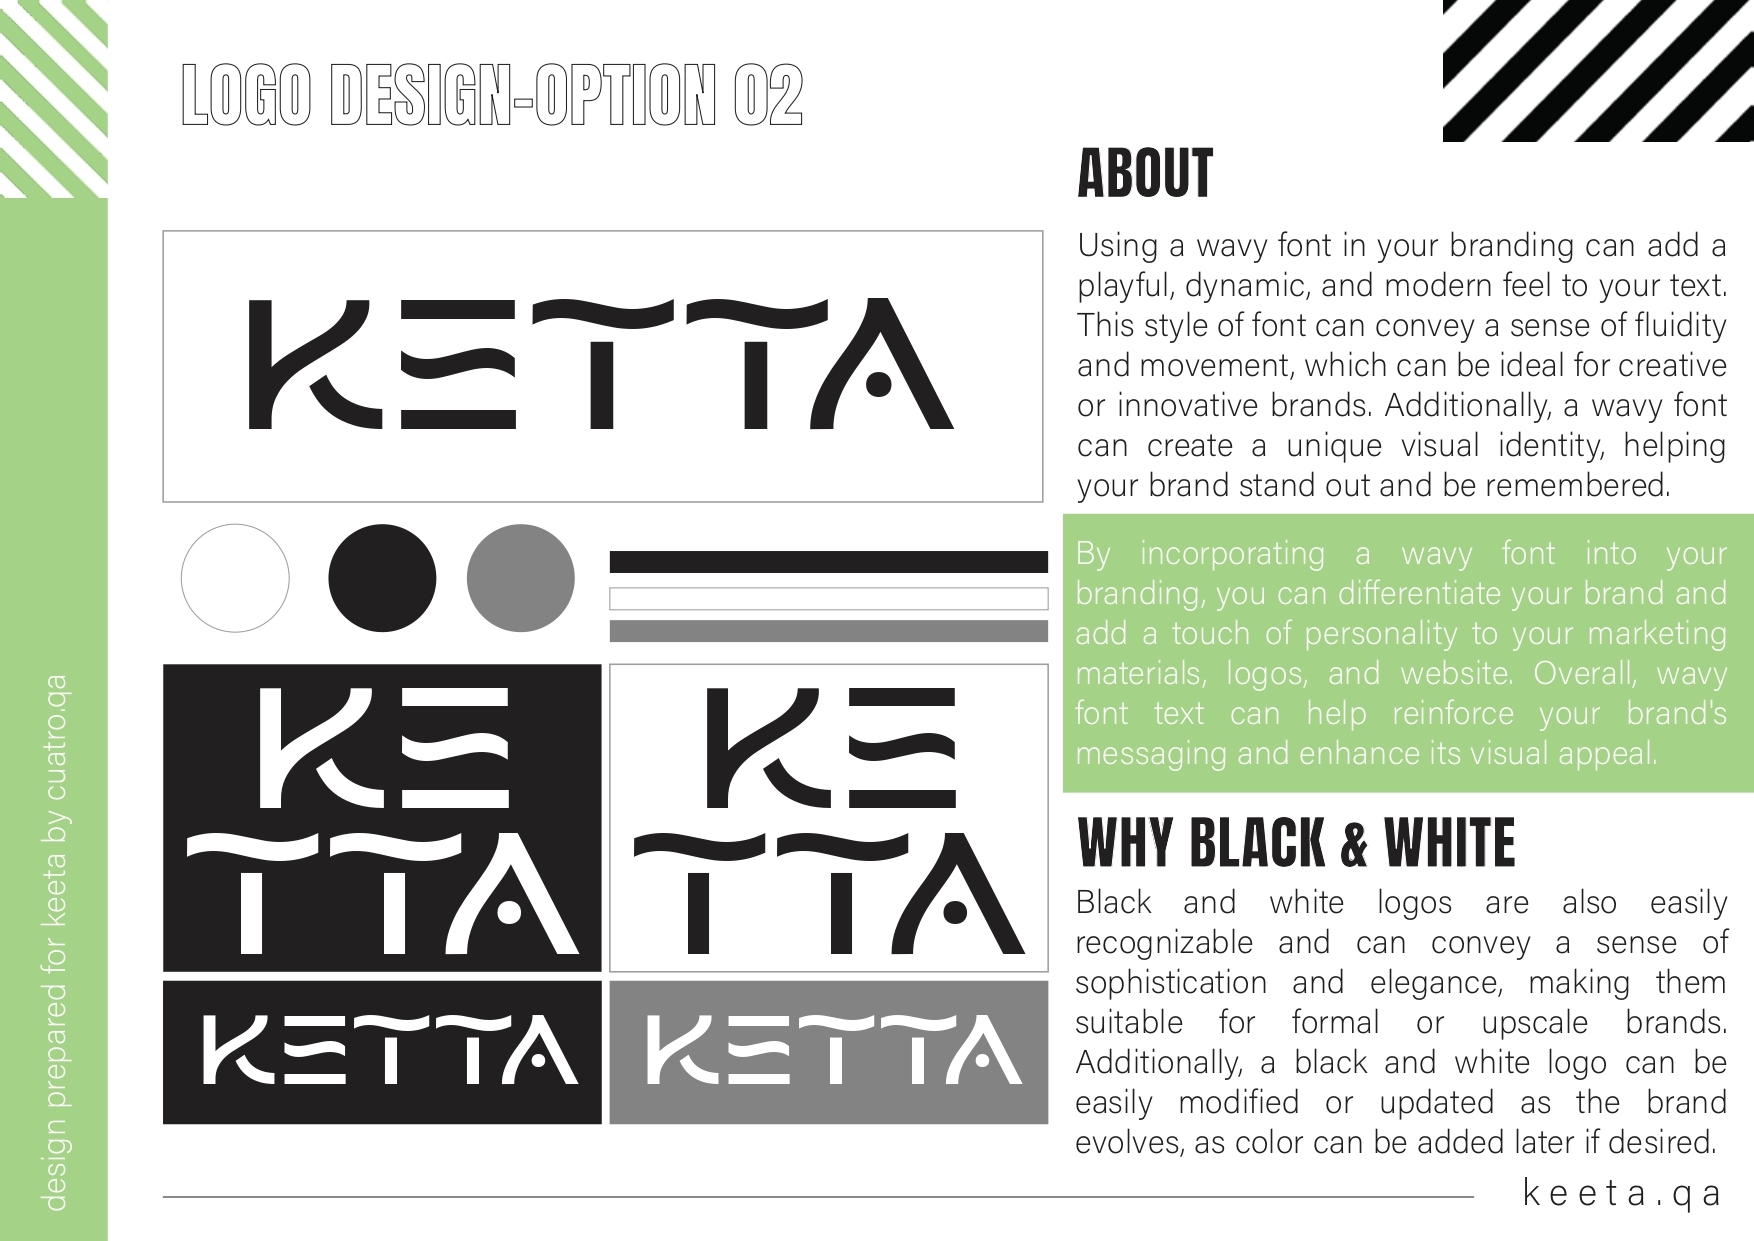 Keeta copy_page-0004